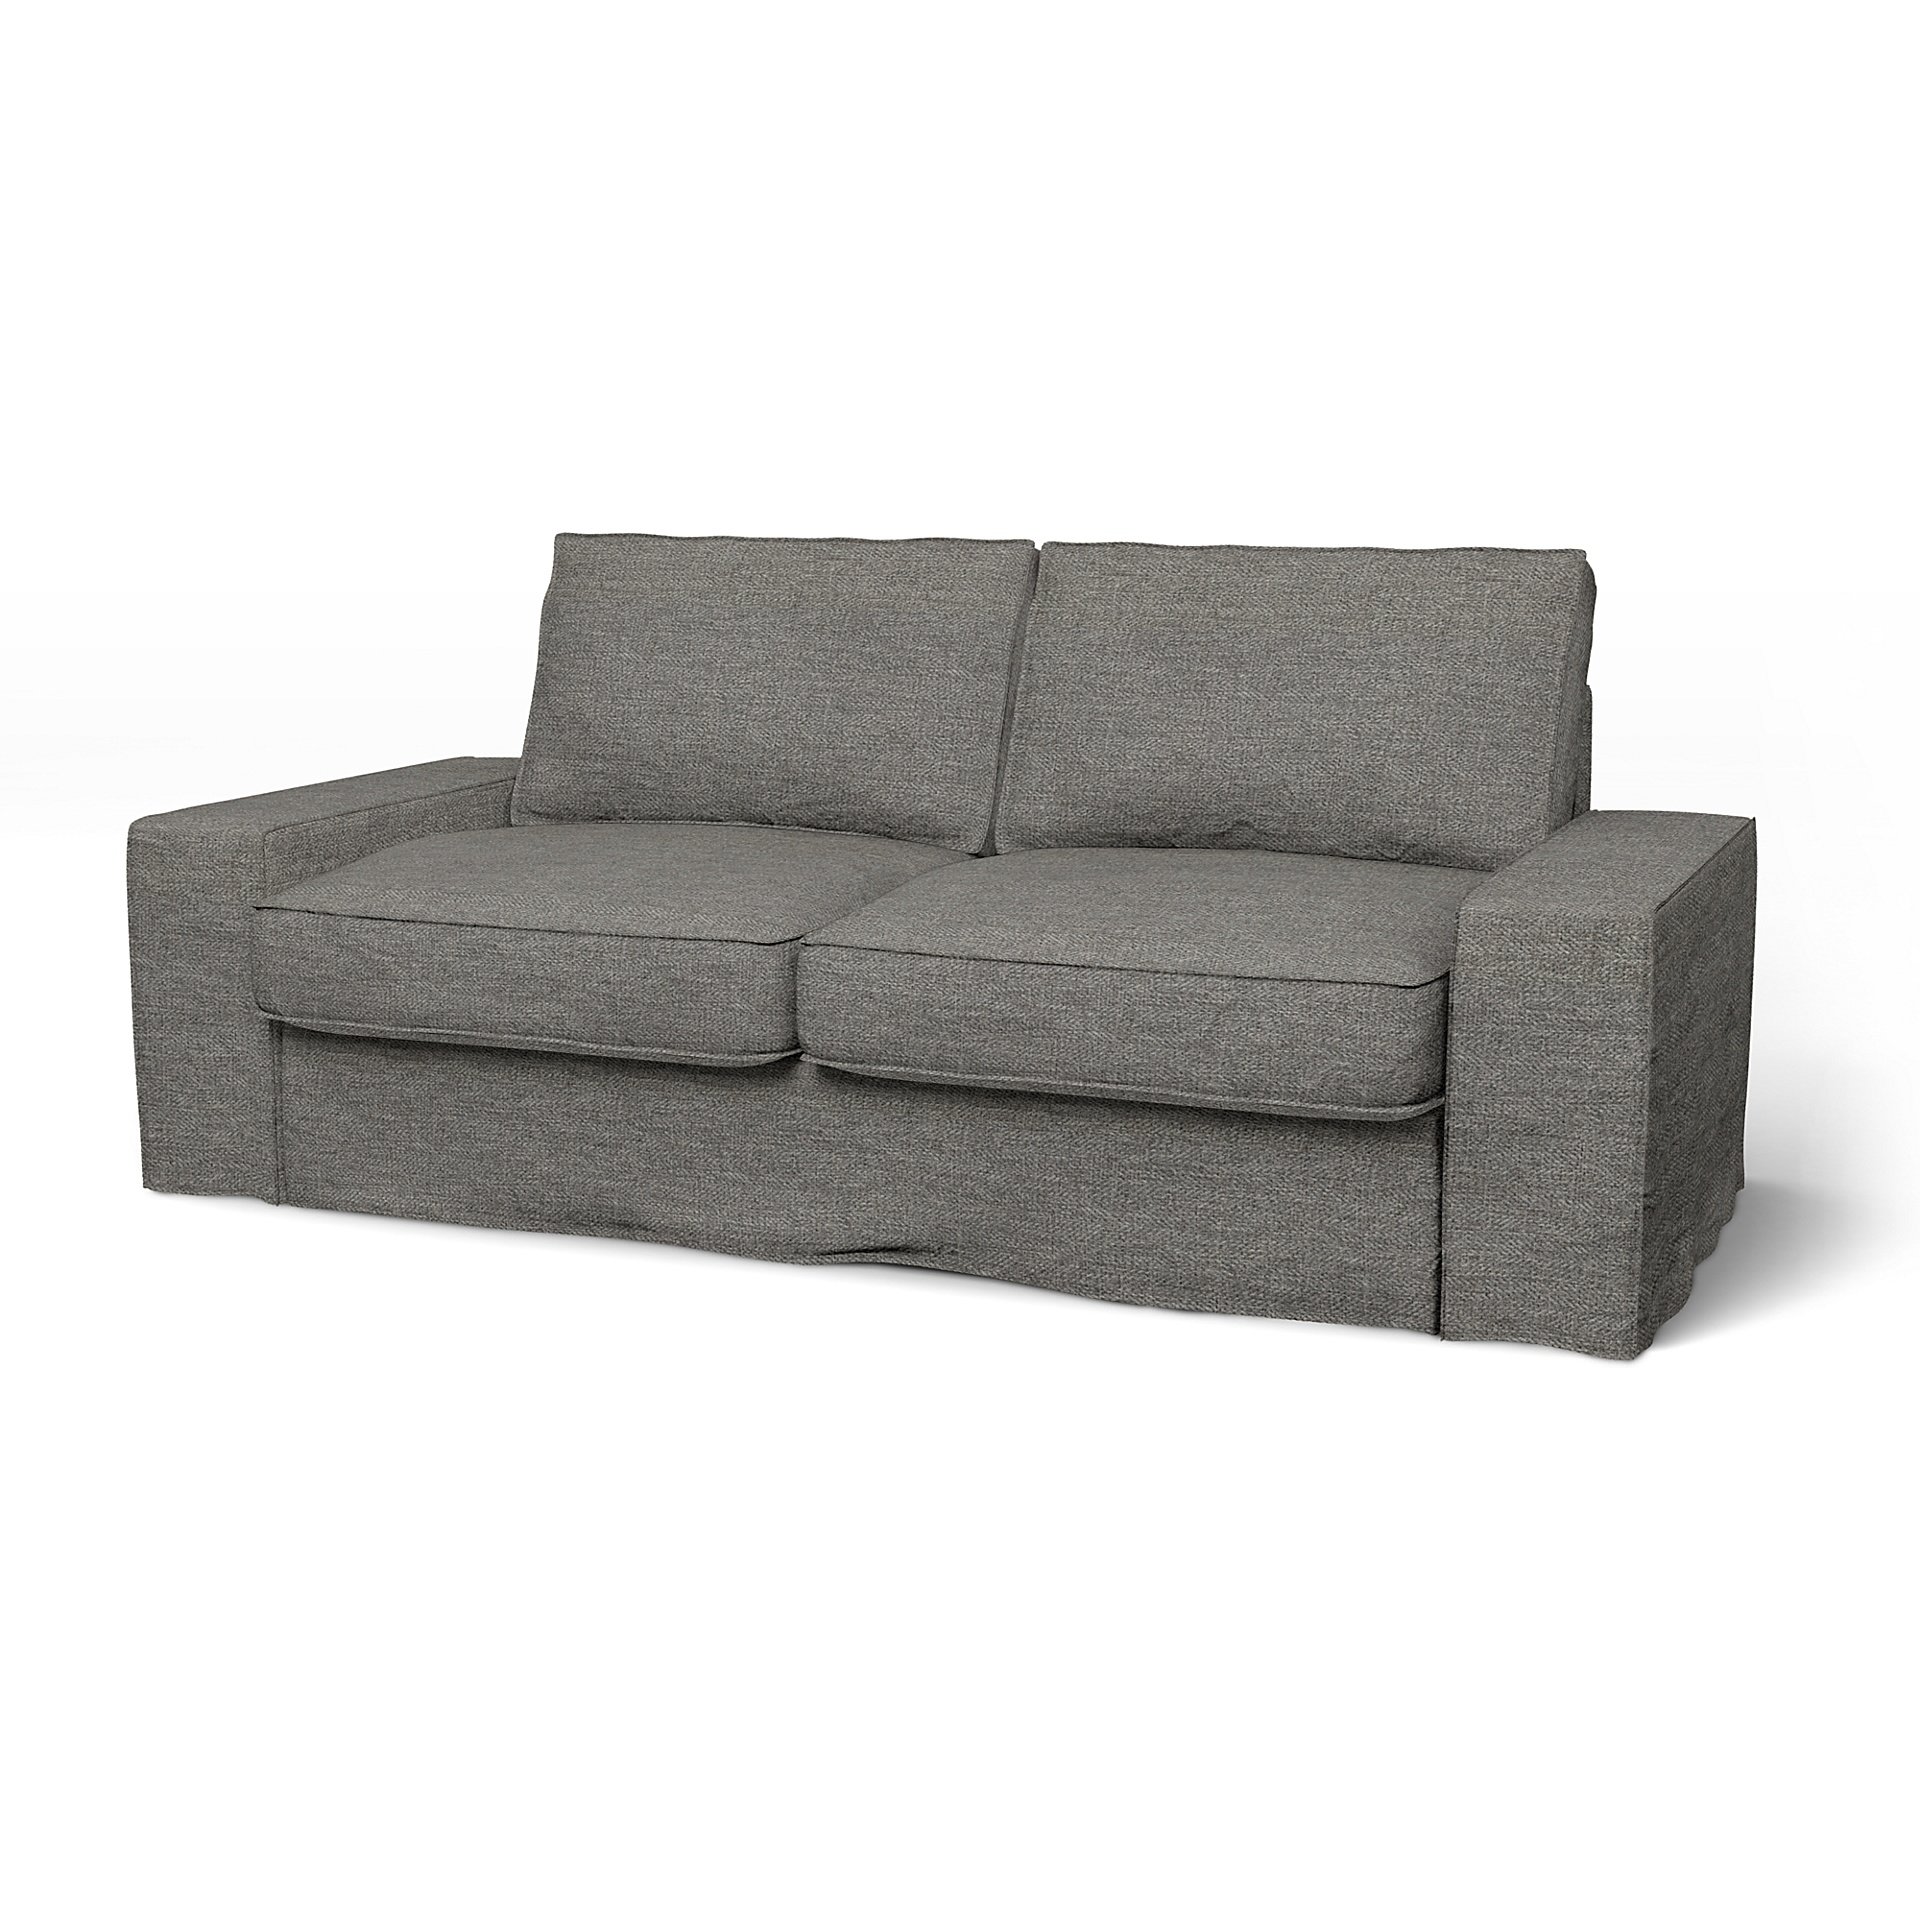 IKEA - Kivik 2 Seater Sofa Cover, Taupe, Boucle & Texture - Bemz